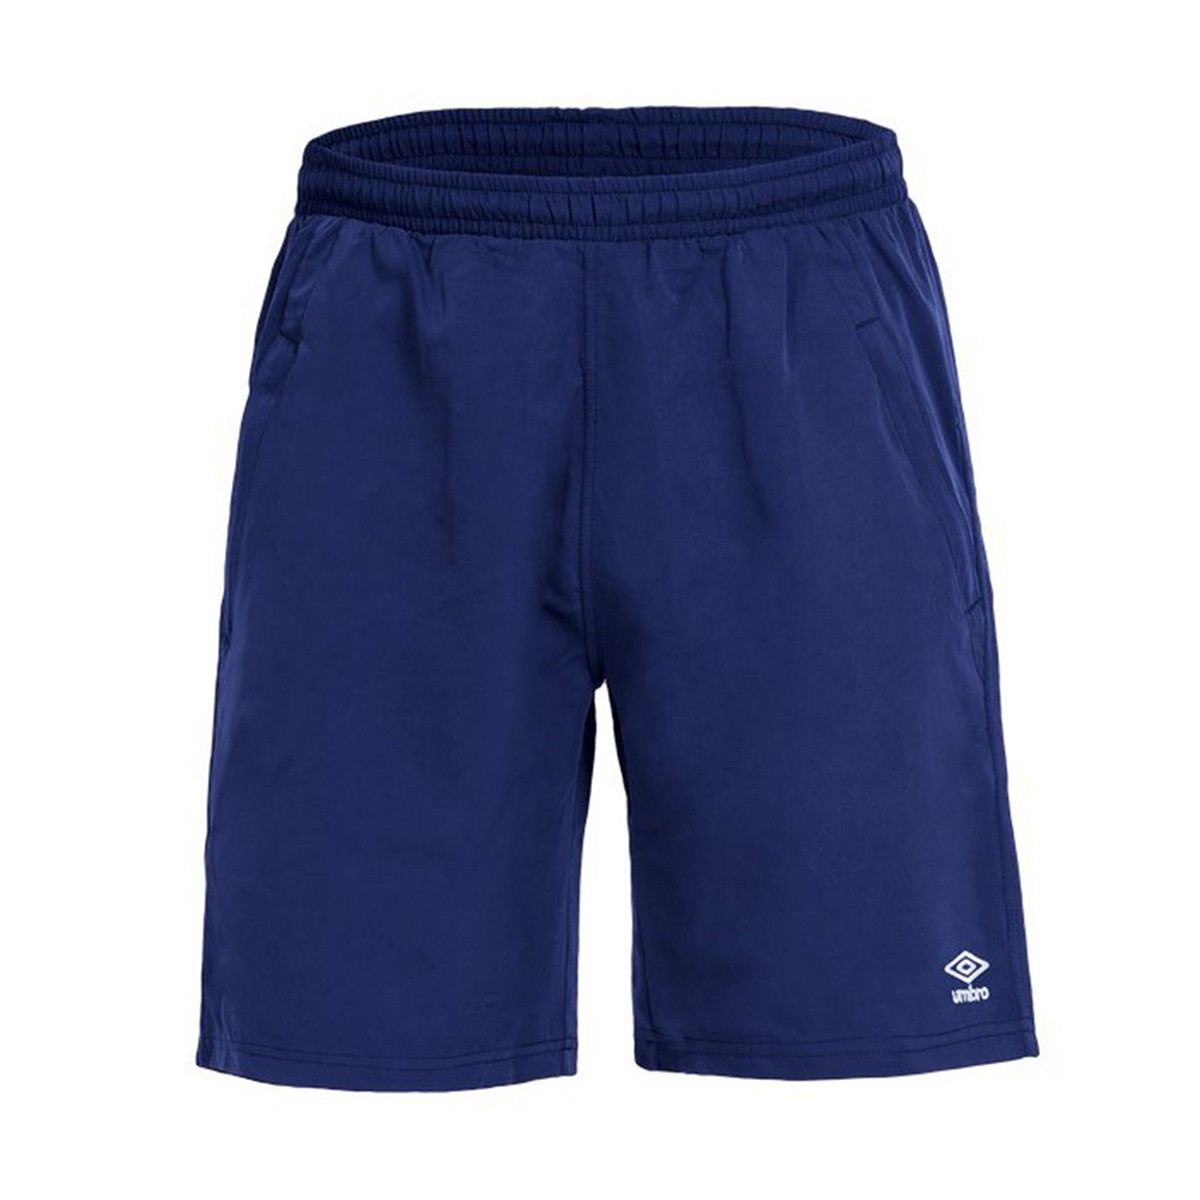 umbro shorts with zip pockets